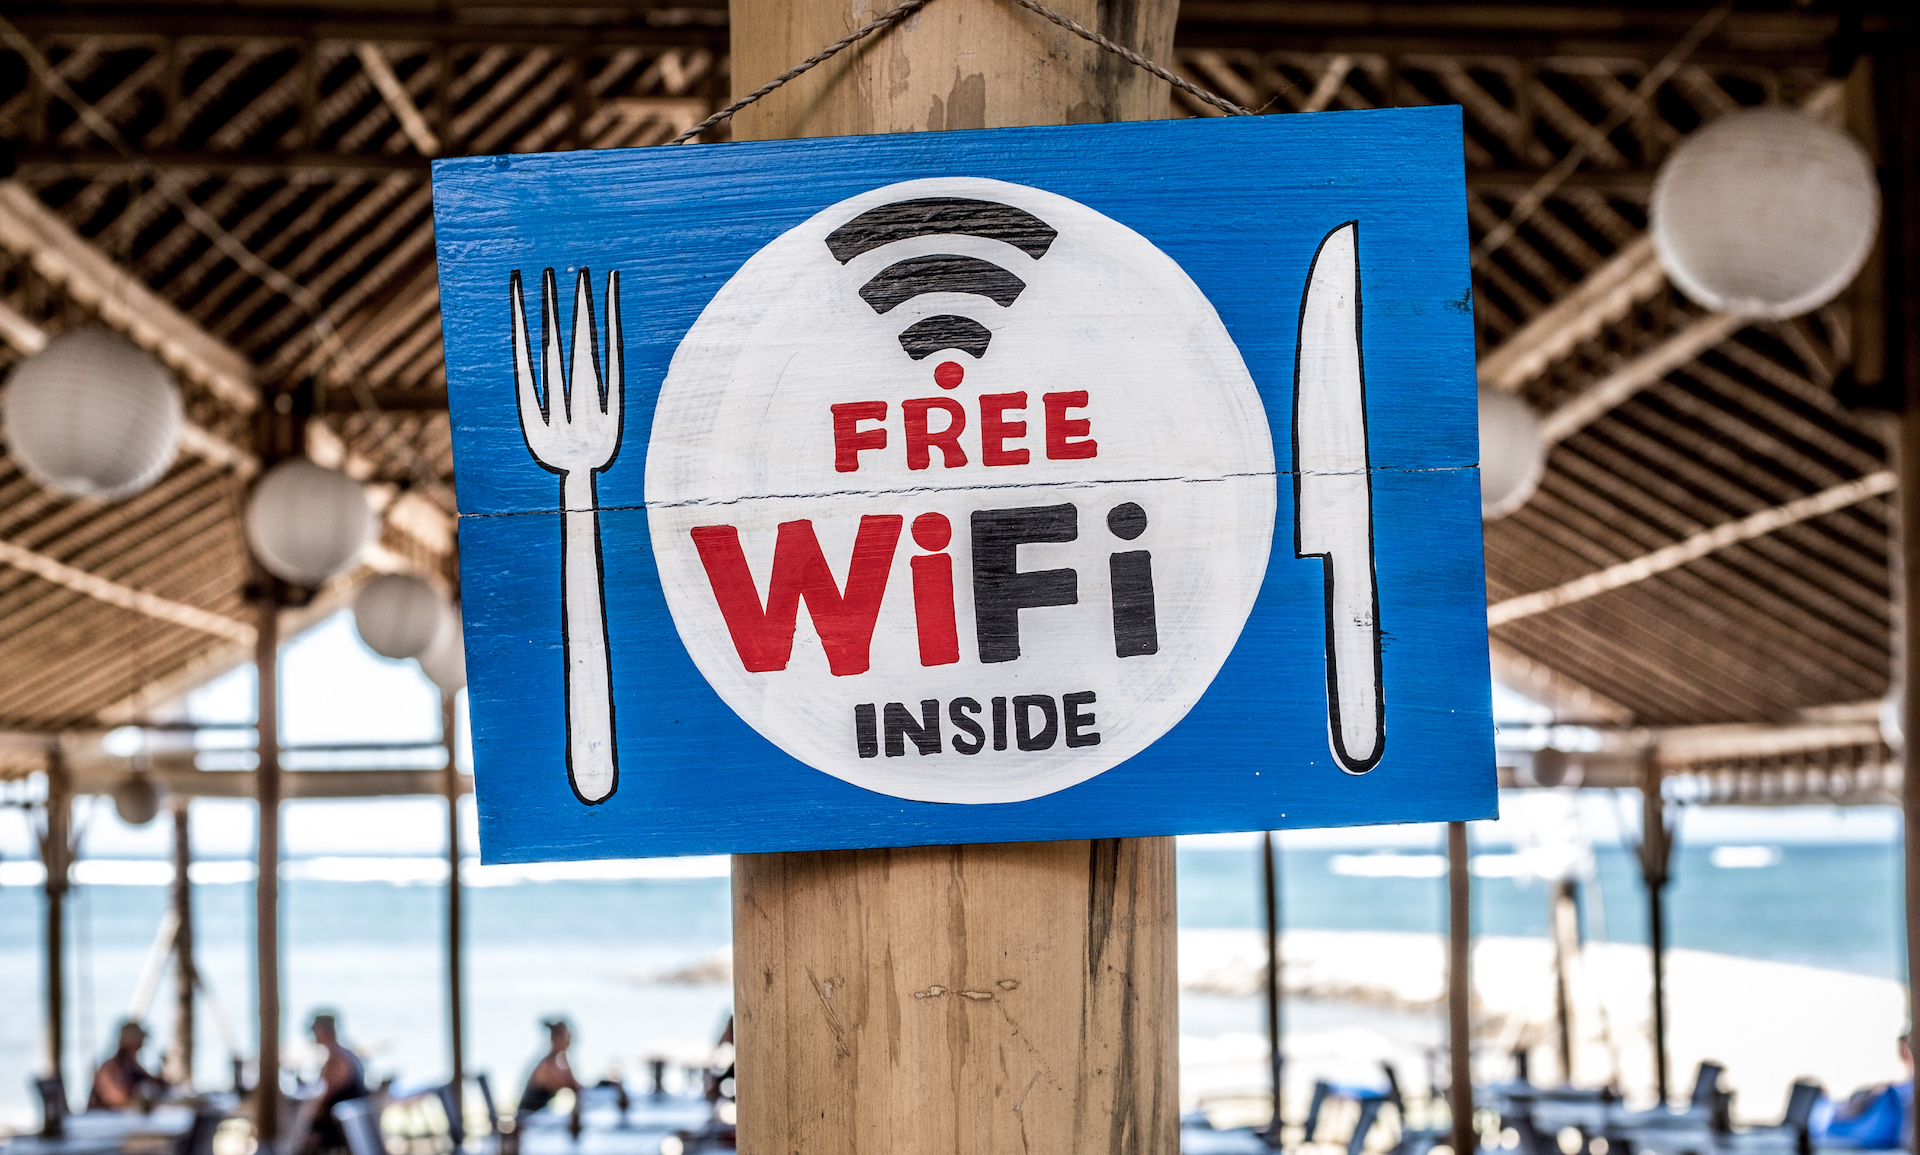 Restaurant sign reads: "Free WiFi Inside"